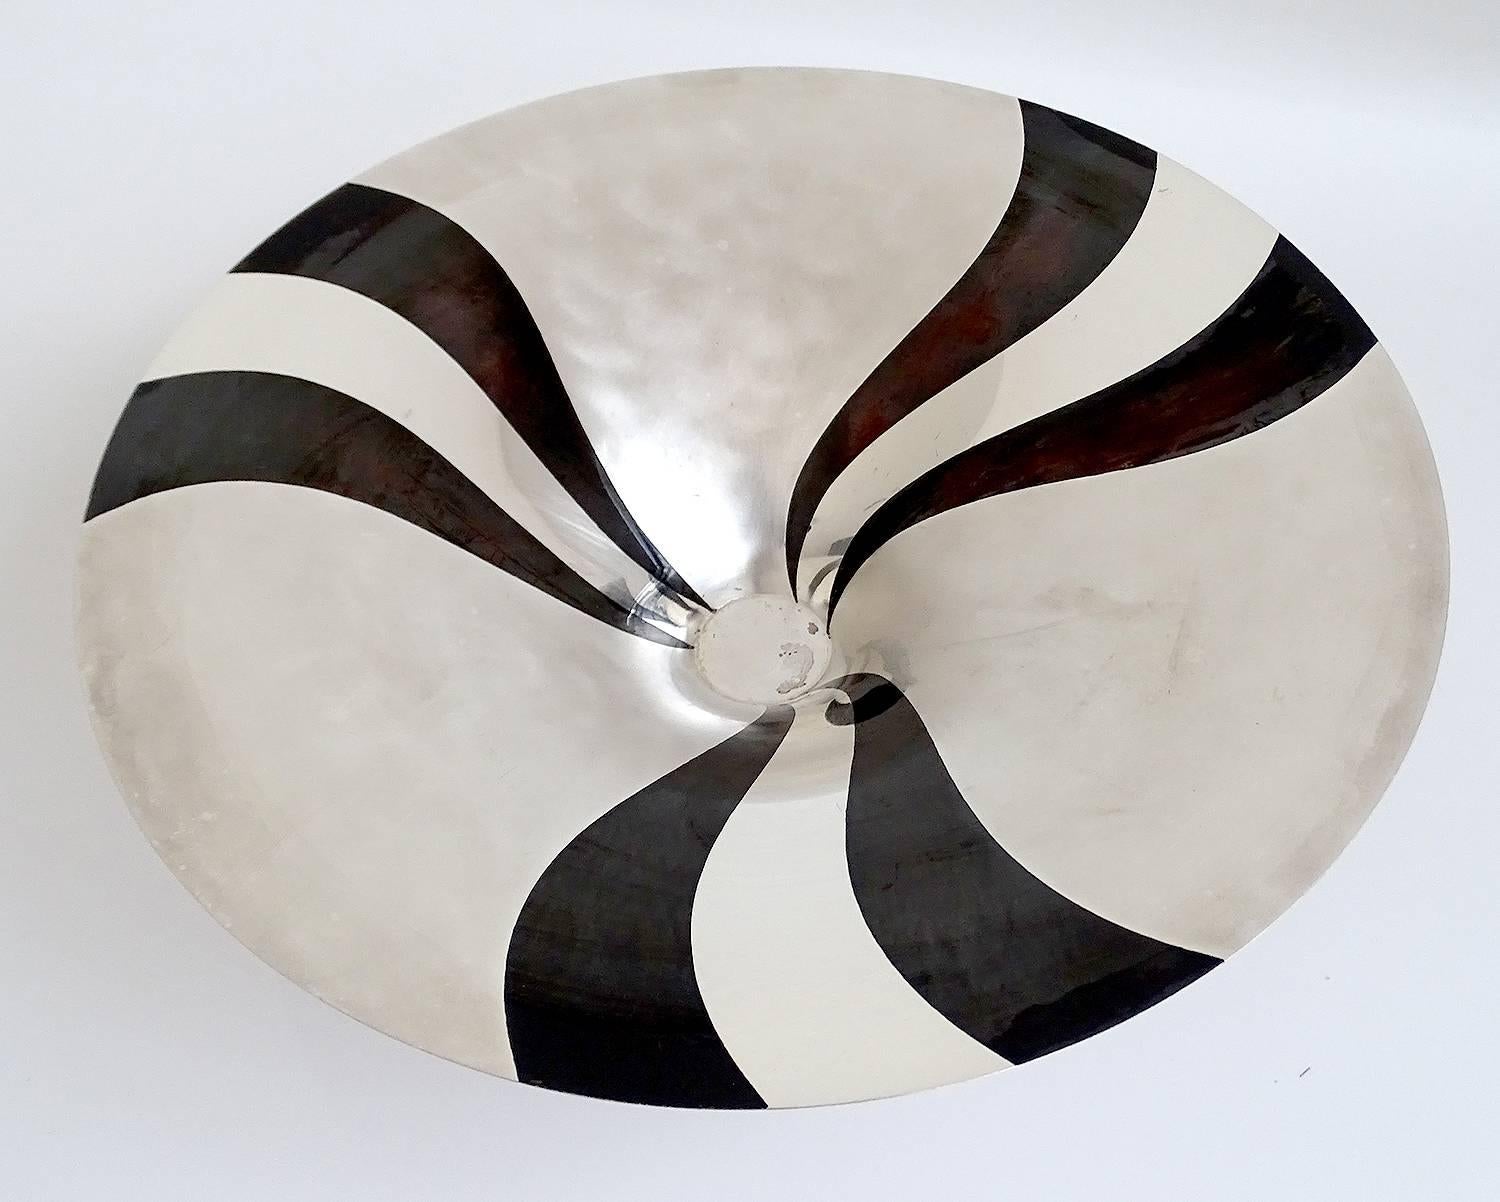 Large Art Deco WMF Ikora Silver Plated Bowl Centerpiece, 1930s Modernist Design 2